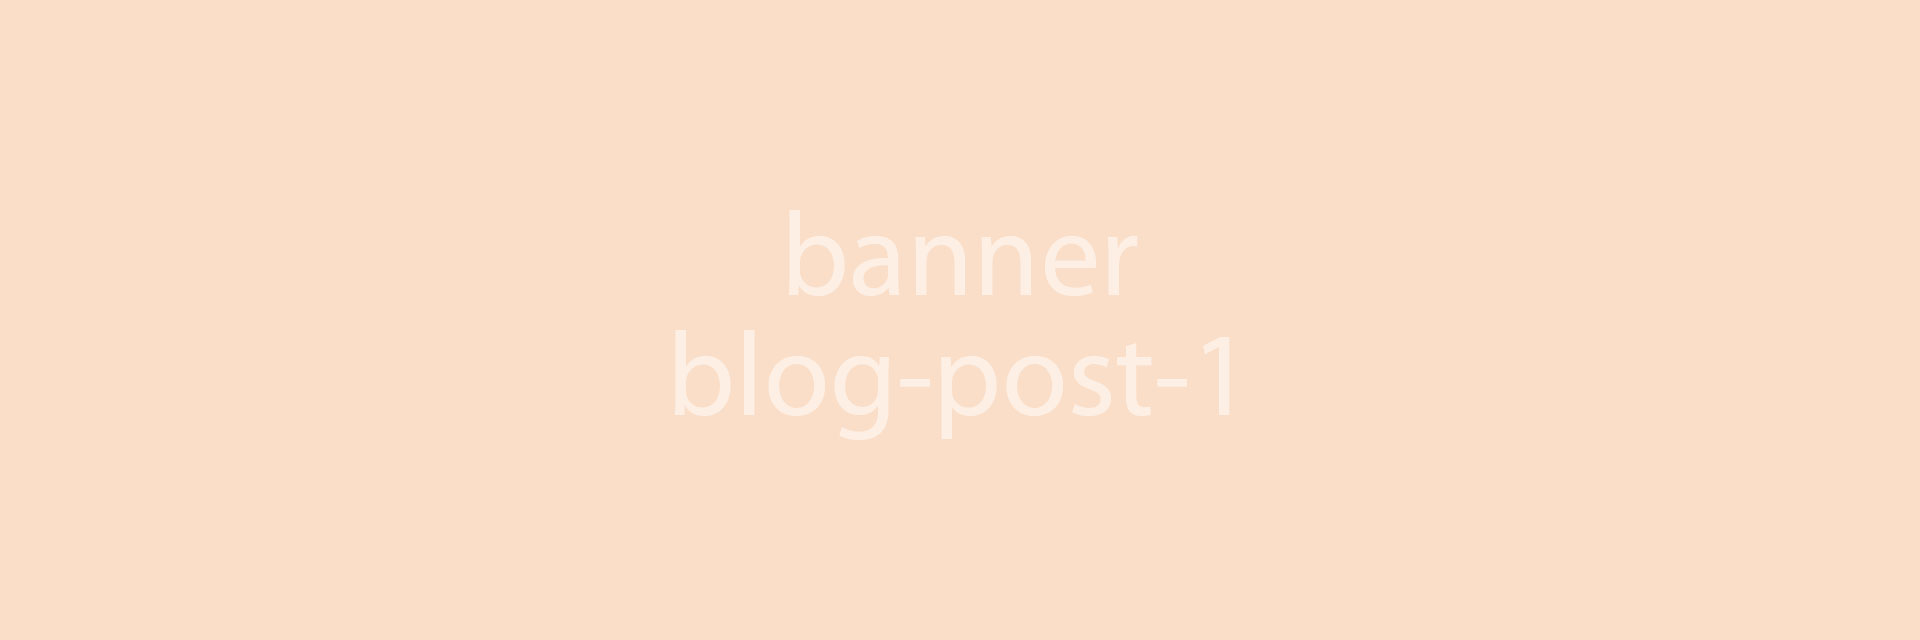 Blog Post 1